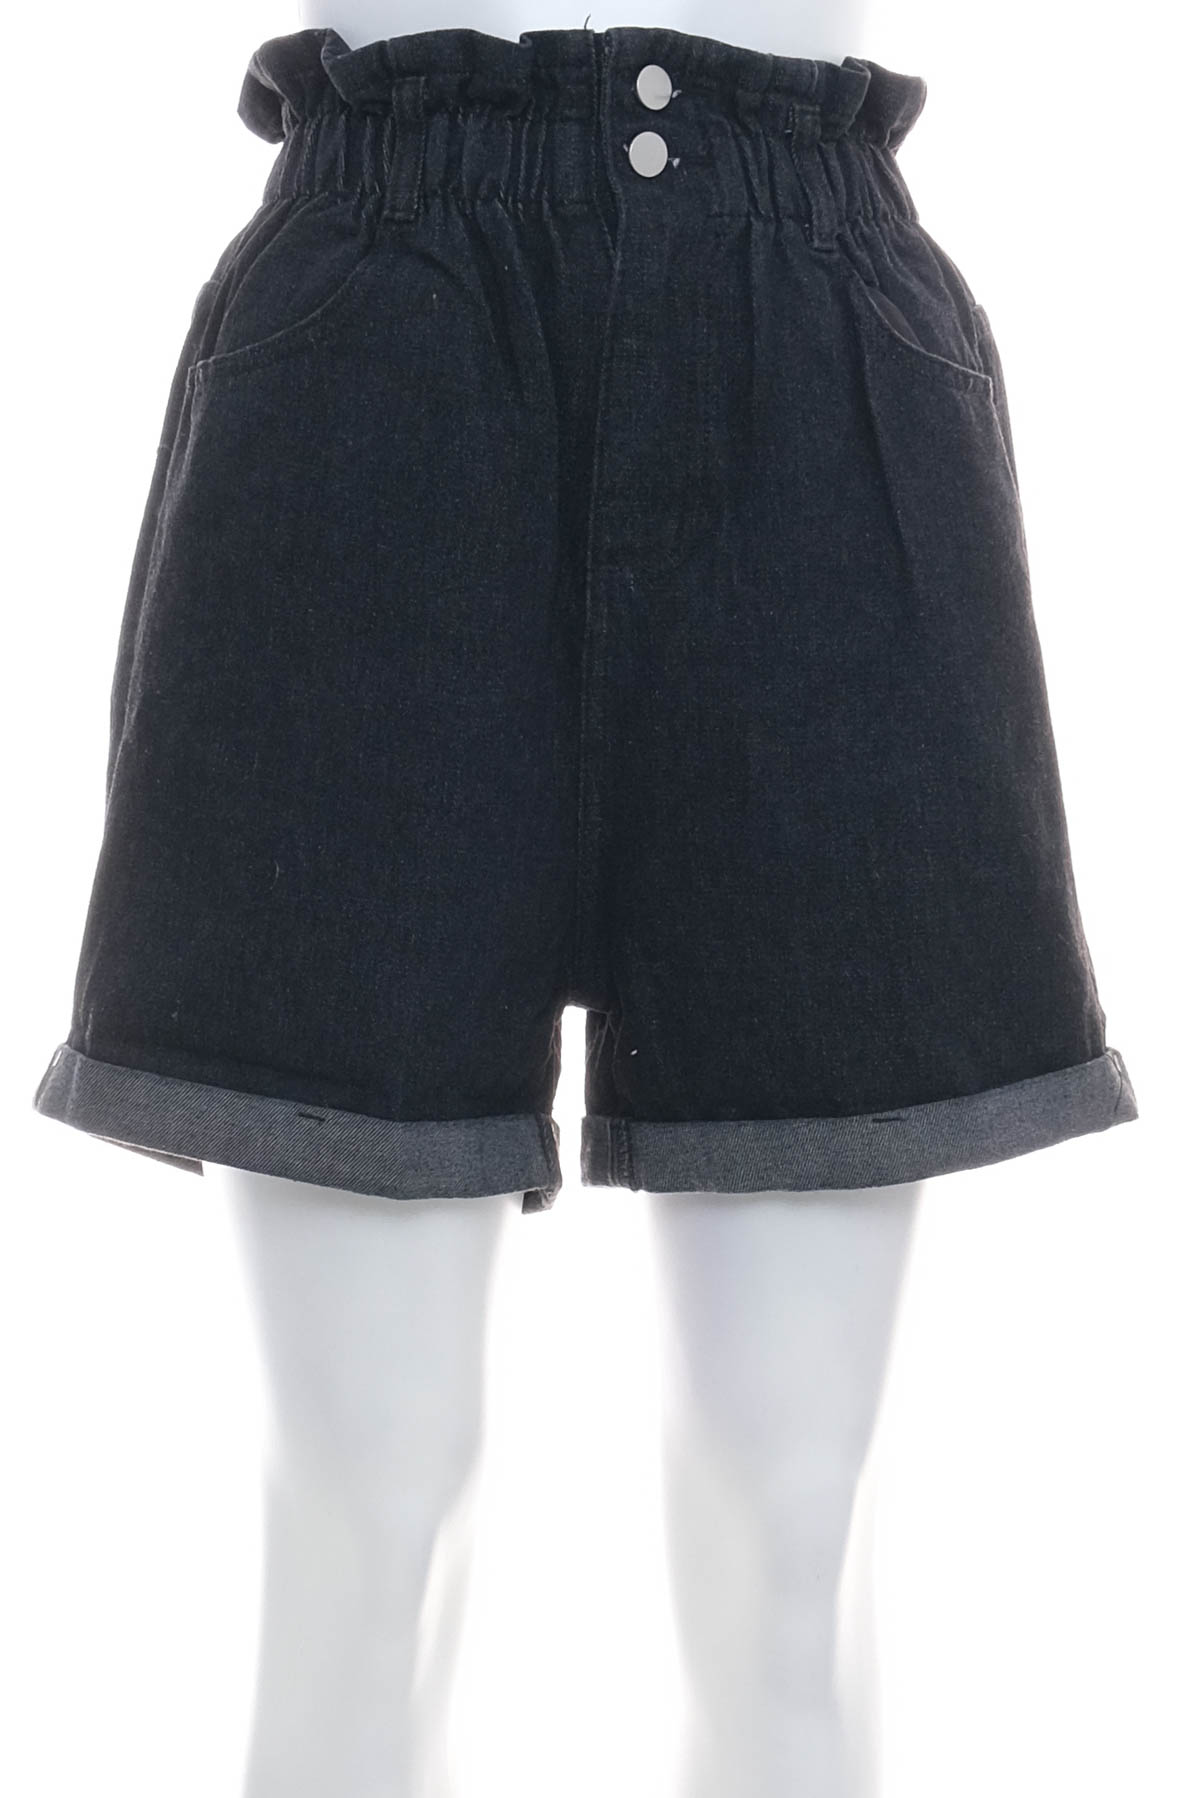 Female shorts - MINX & MOSS - 0